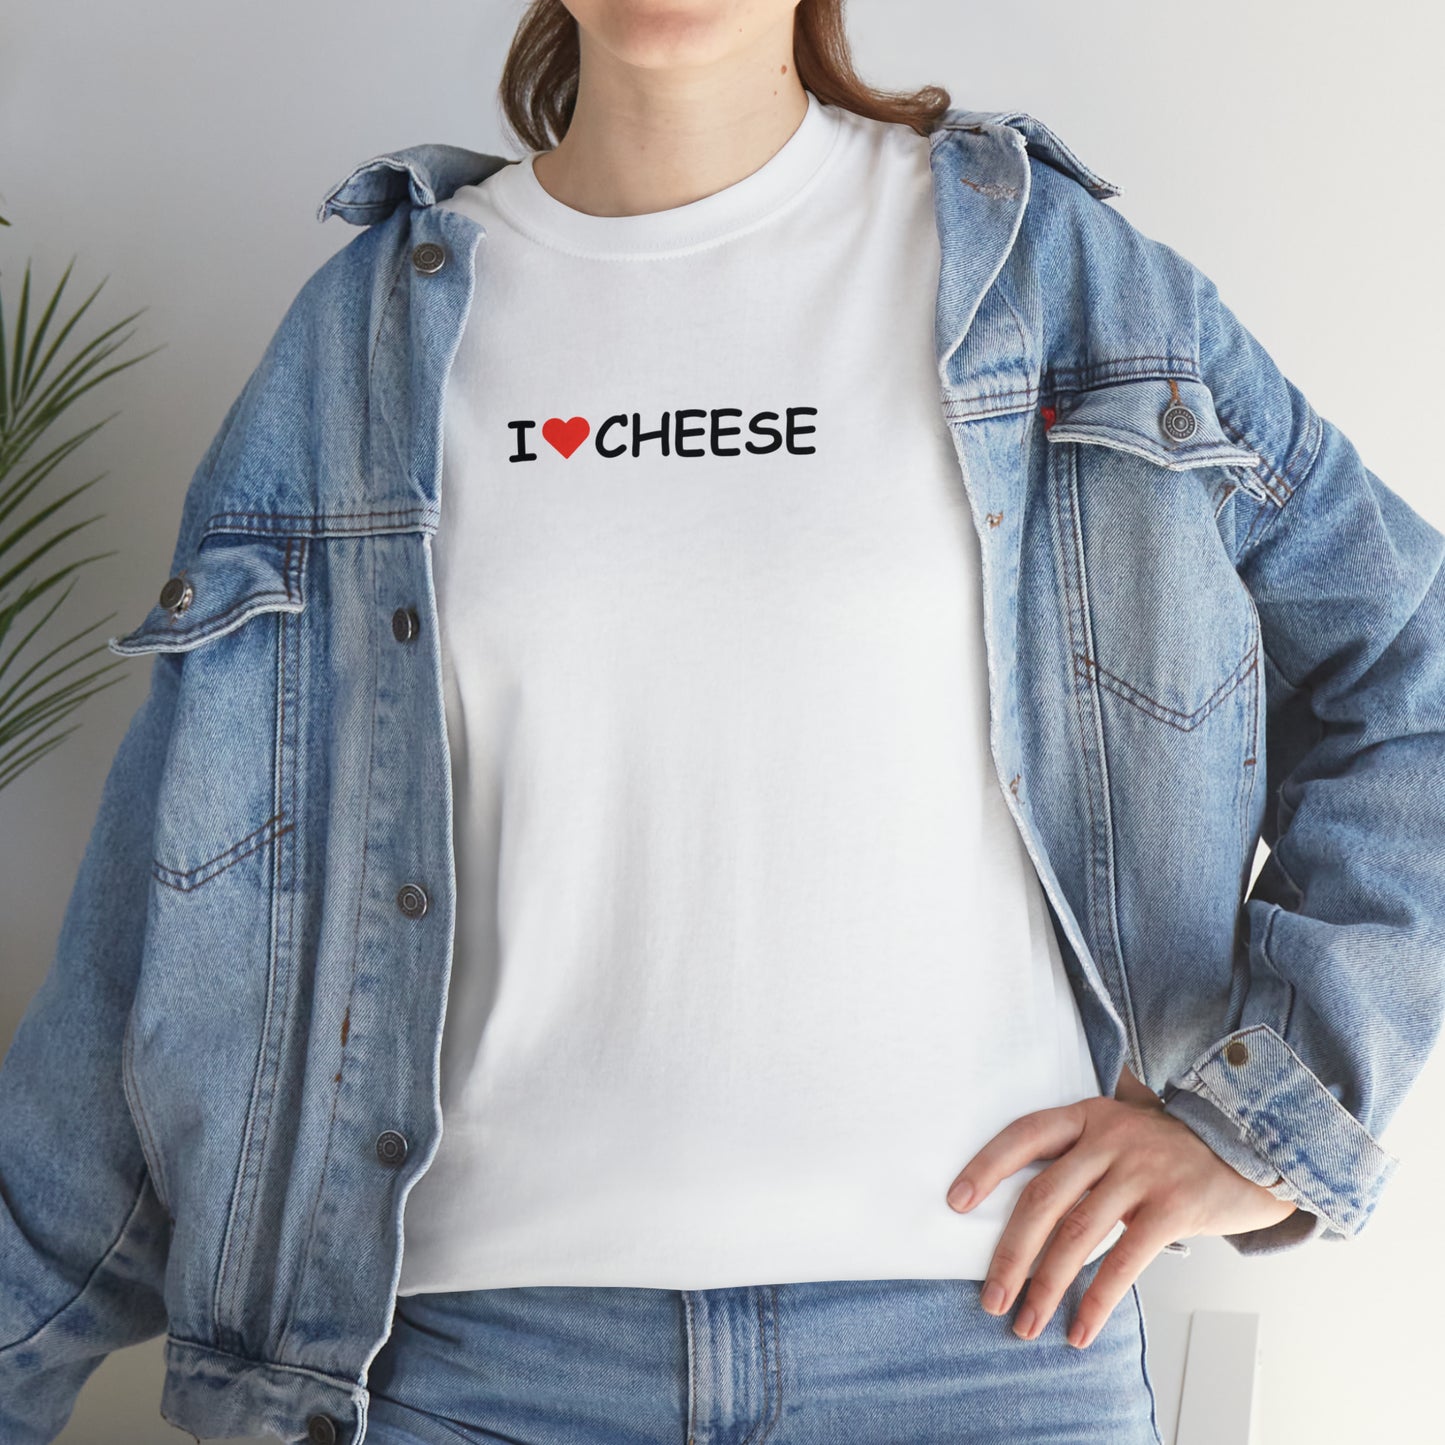 I Love Cheese, I Heart Cheese, Funny Food Tee, Meme T-Shirt